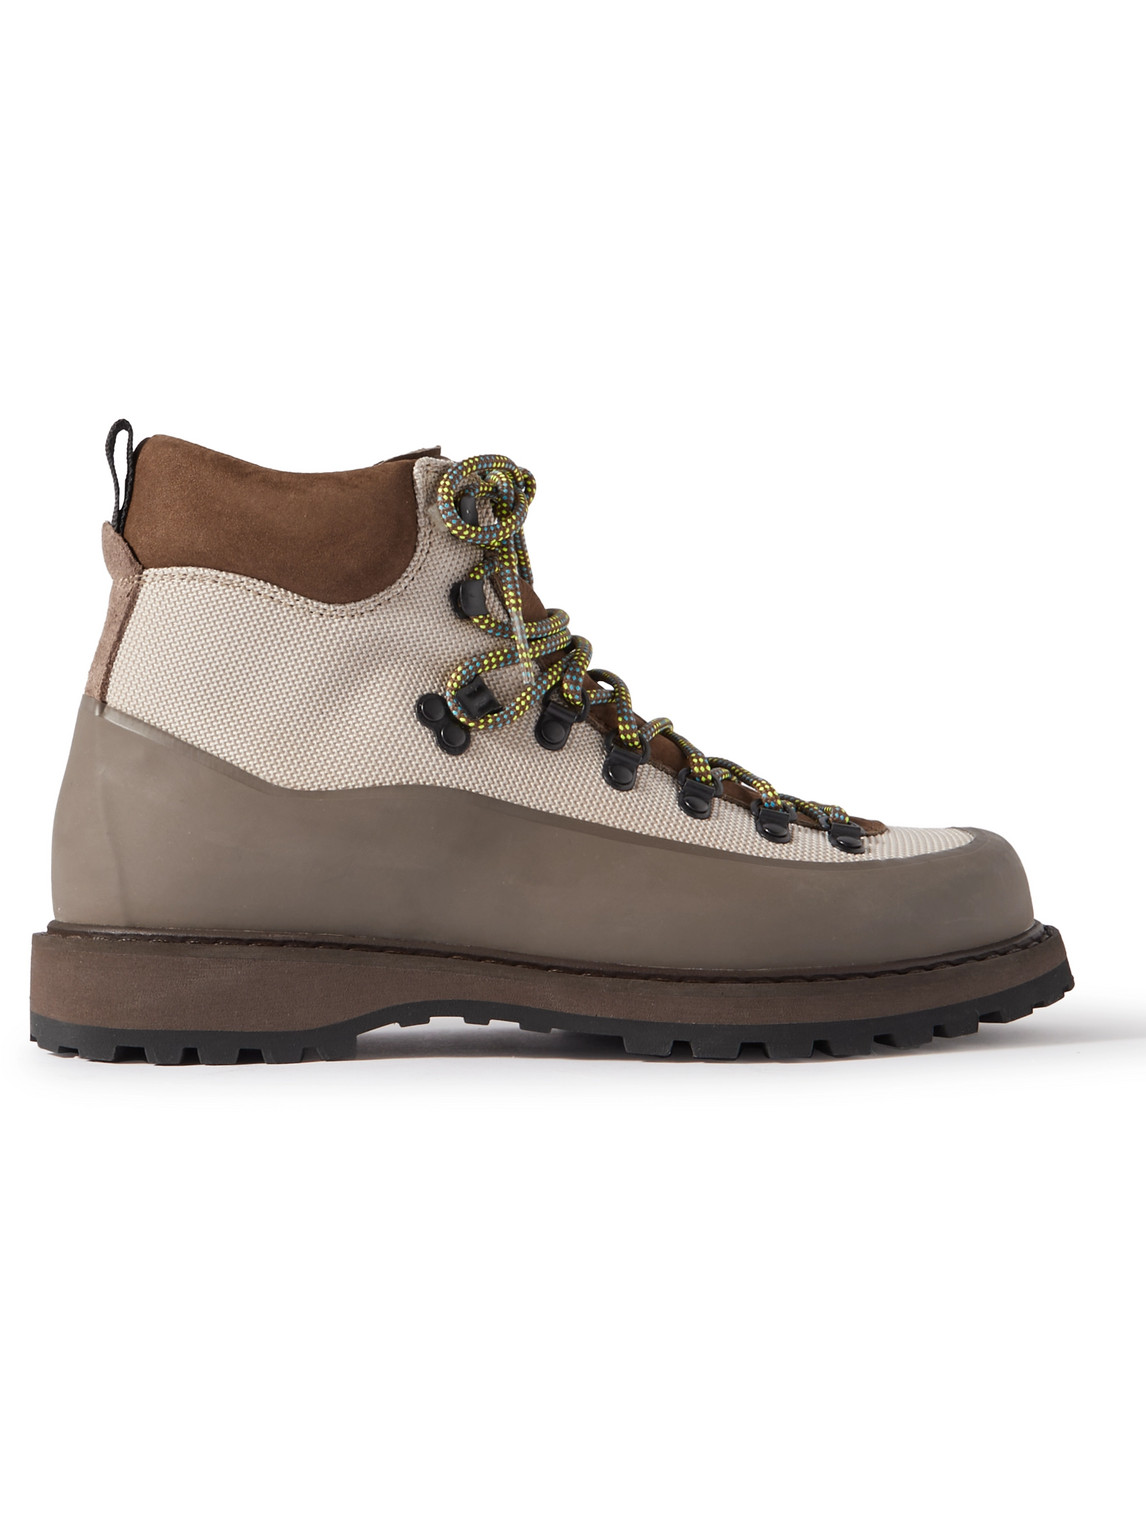 Diemme - Roccia Vet Sport Rubber and Suede-Trimmed Tech-Mesh Hiking Boots - Men - Gray - EU 44 von Diemme